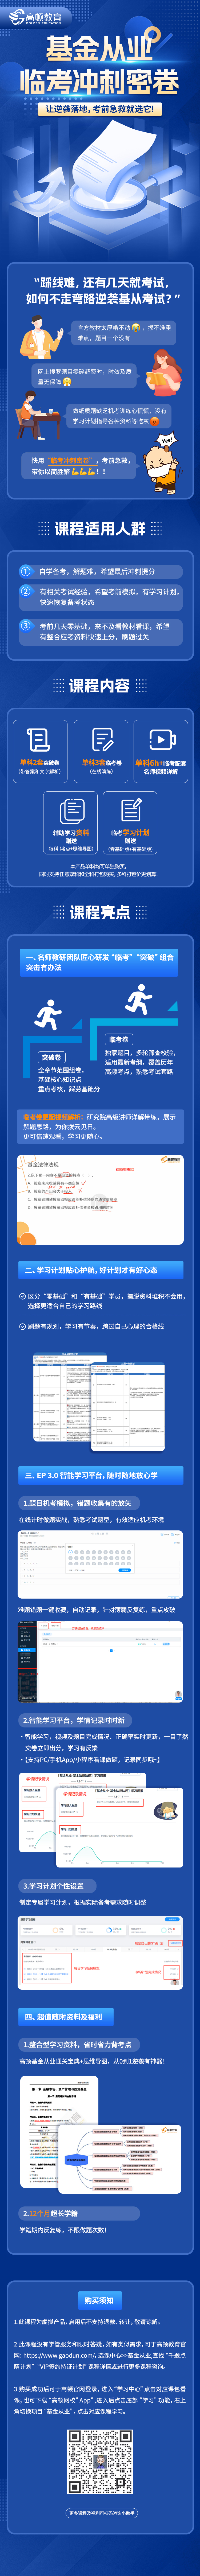 https://simg01.gaodunwangxiao.com/uploadfiles/product-center/202310/31/e85d5_20231031131420.jpg